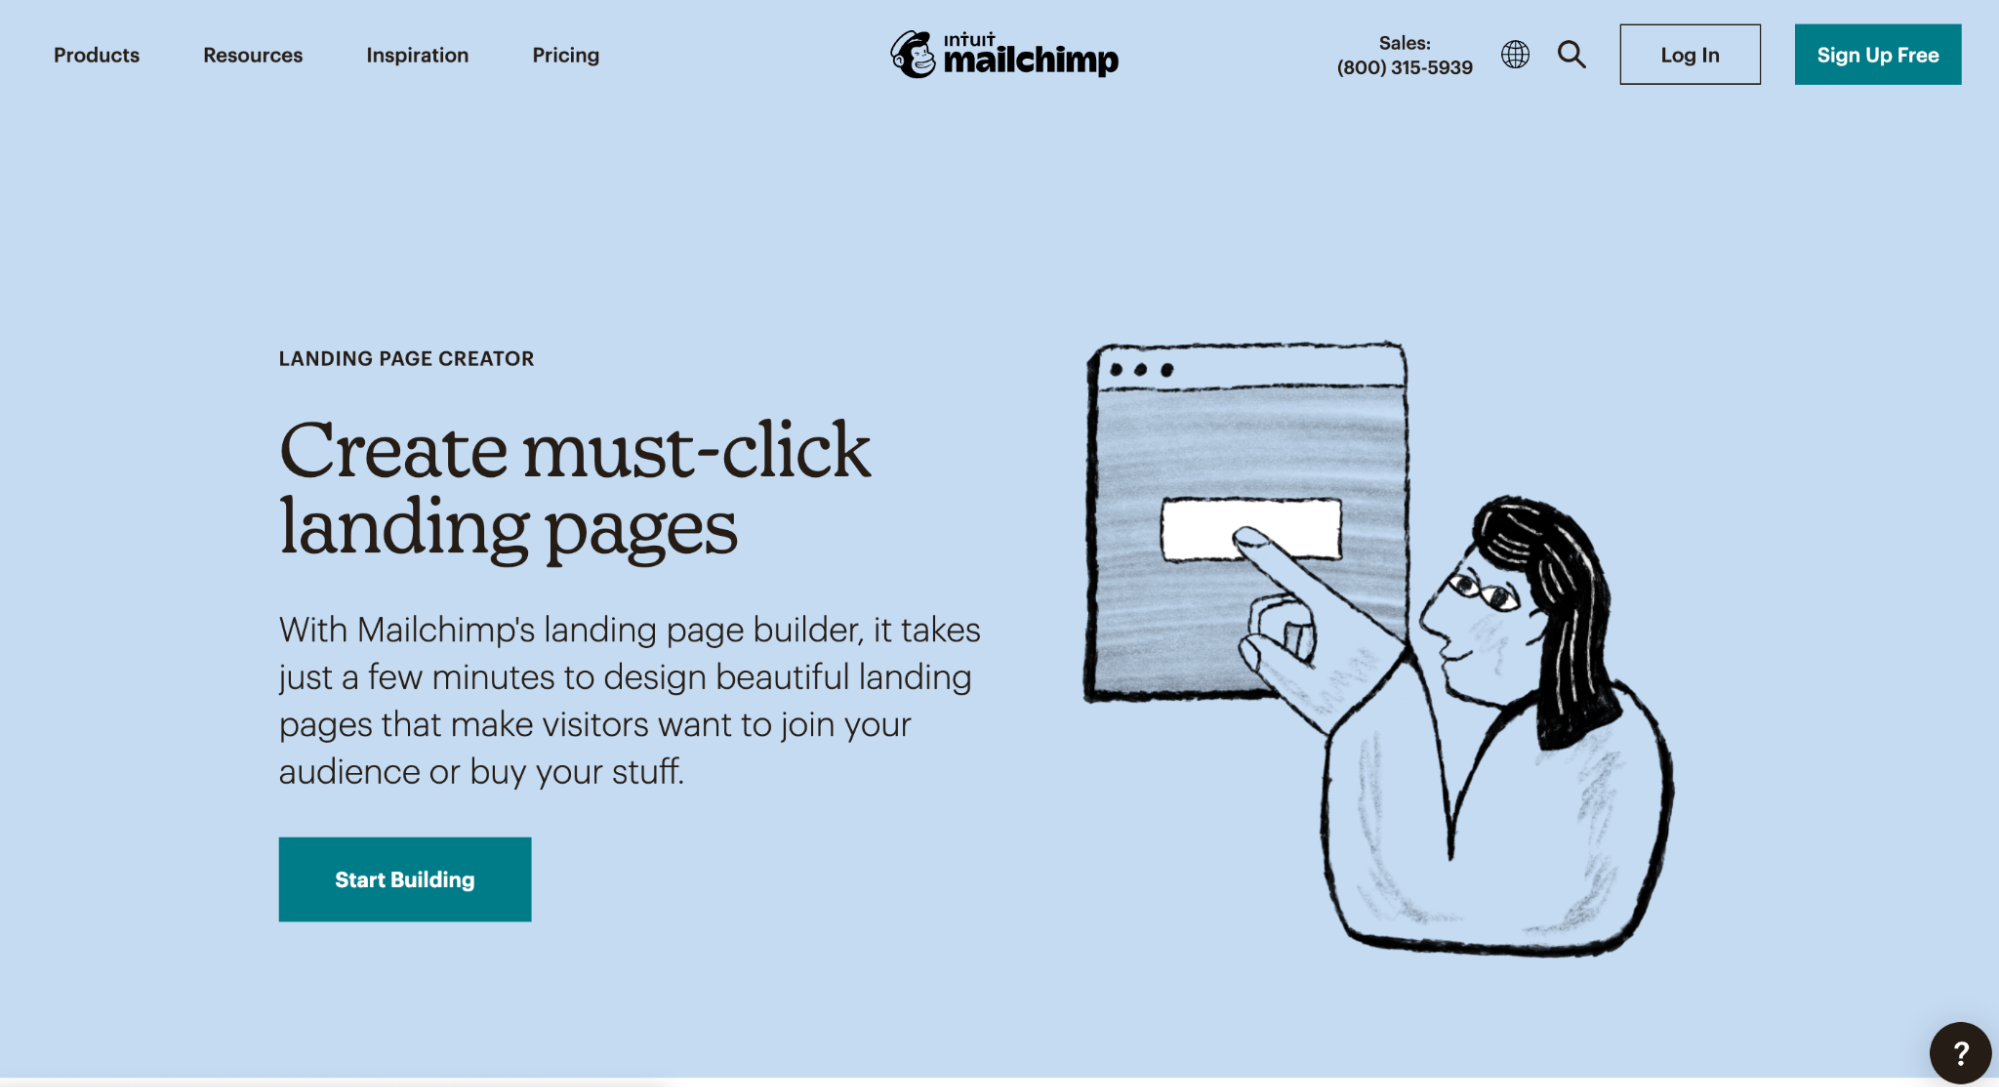 MailChimp’s landing page builder